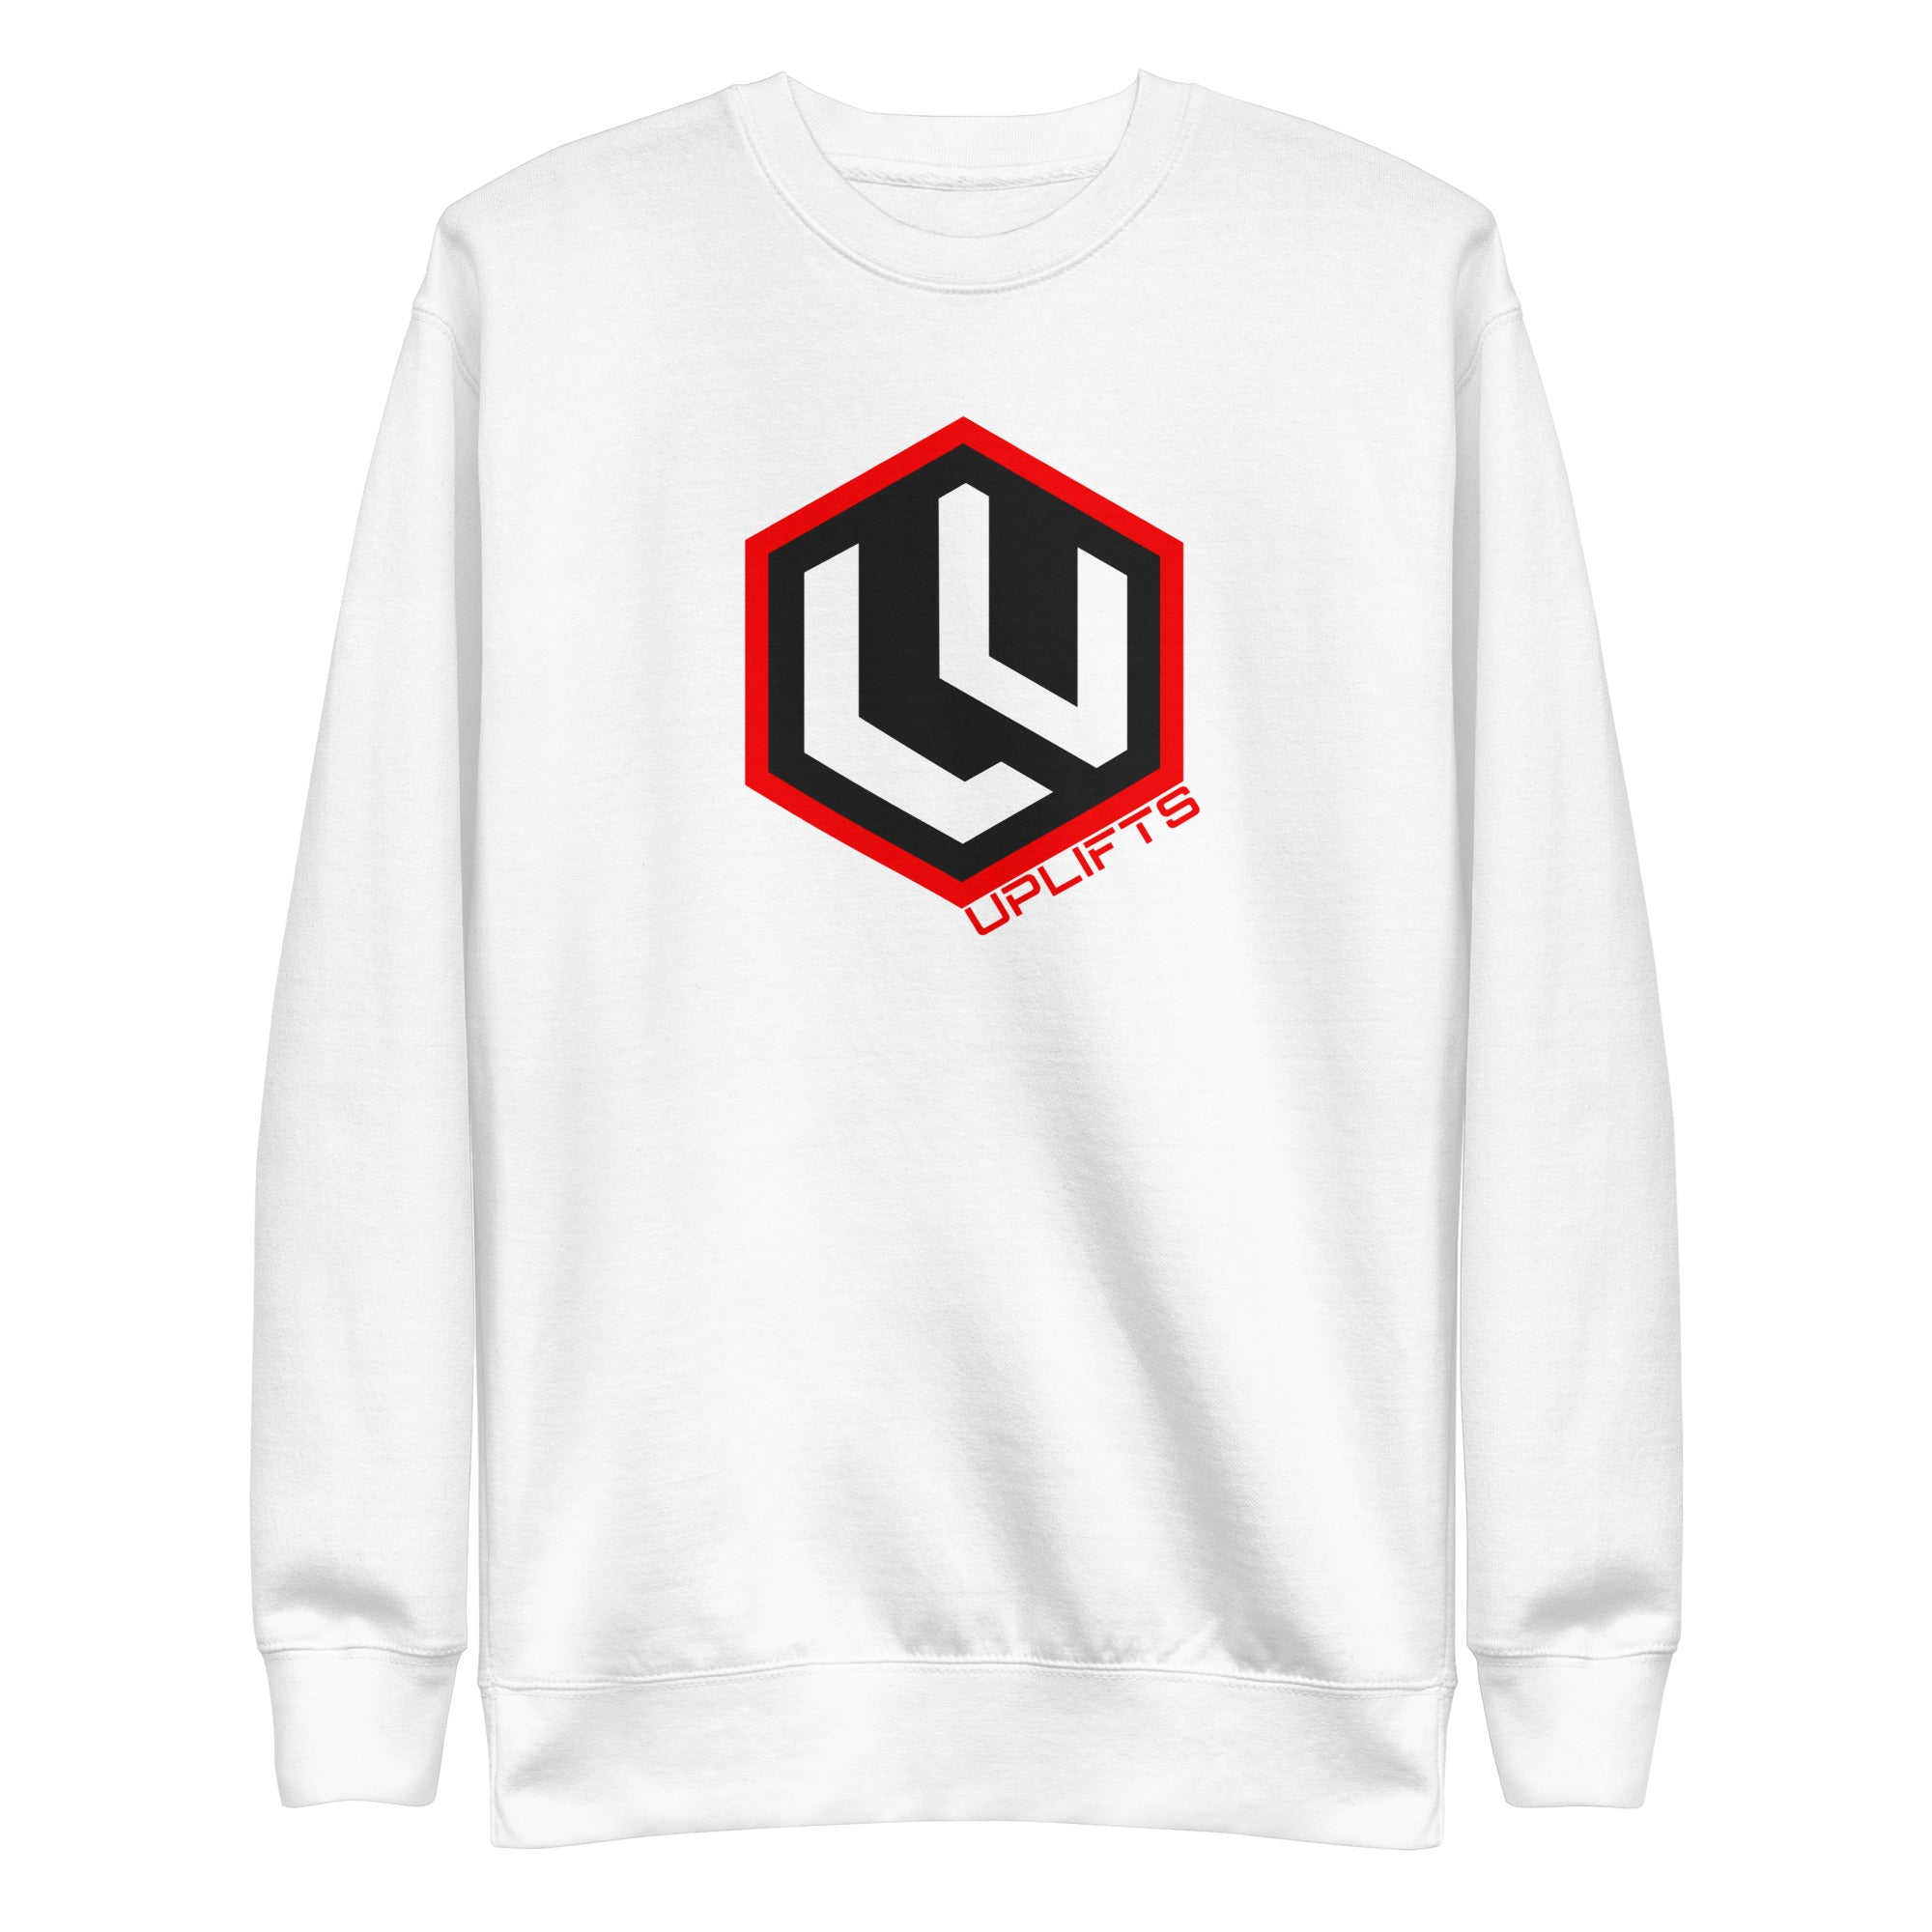 Red LU Logo Unisex Sweatshirt